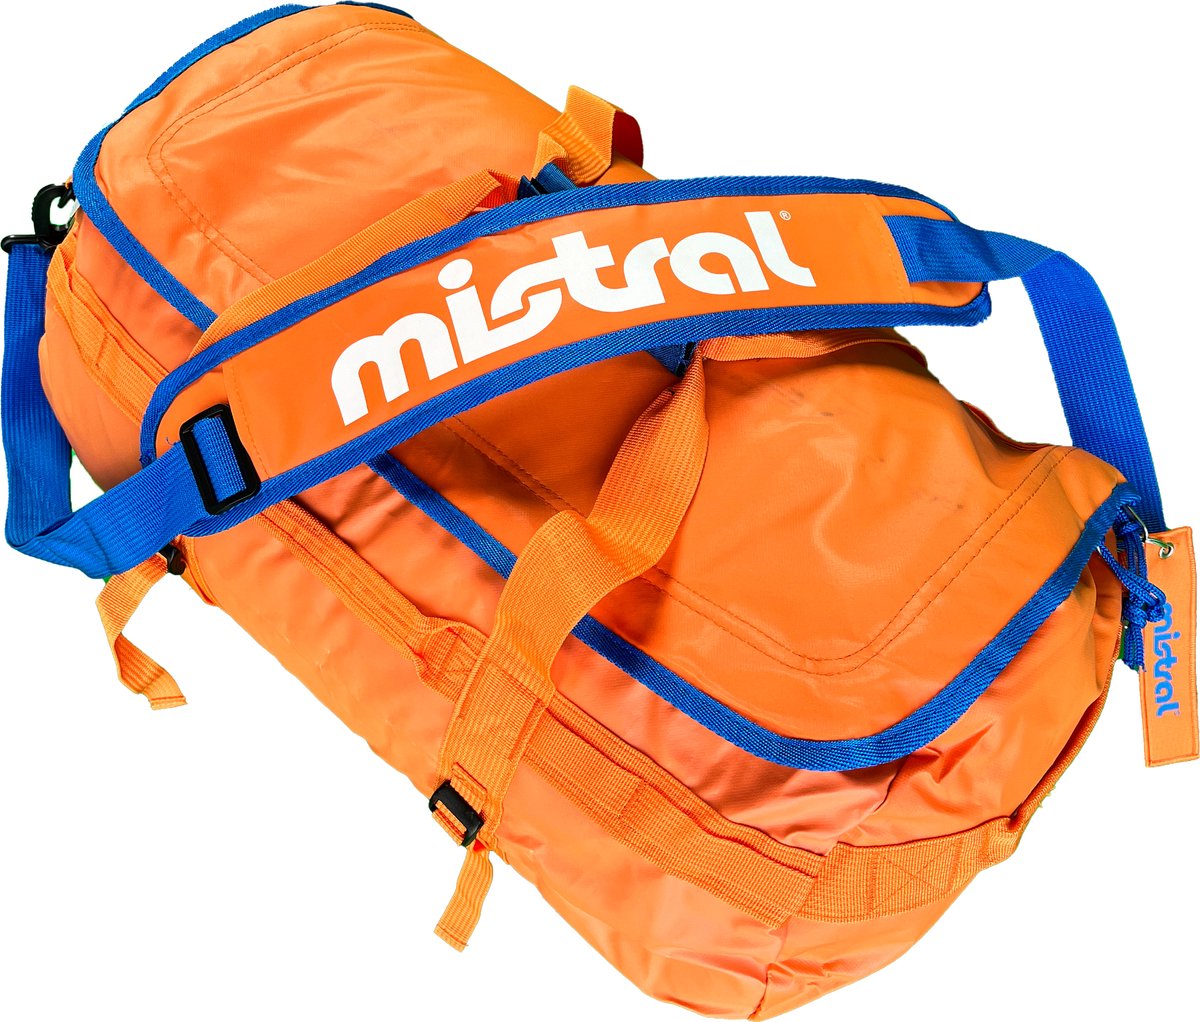 Mistral Reistas Sporttas - Expeditie duffel bag - 65 liter - Waterbestendig – duffle bag - oranje